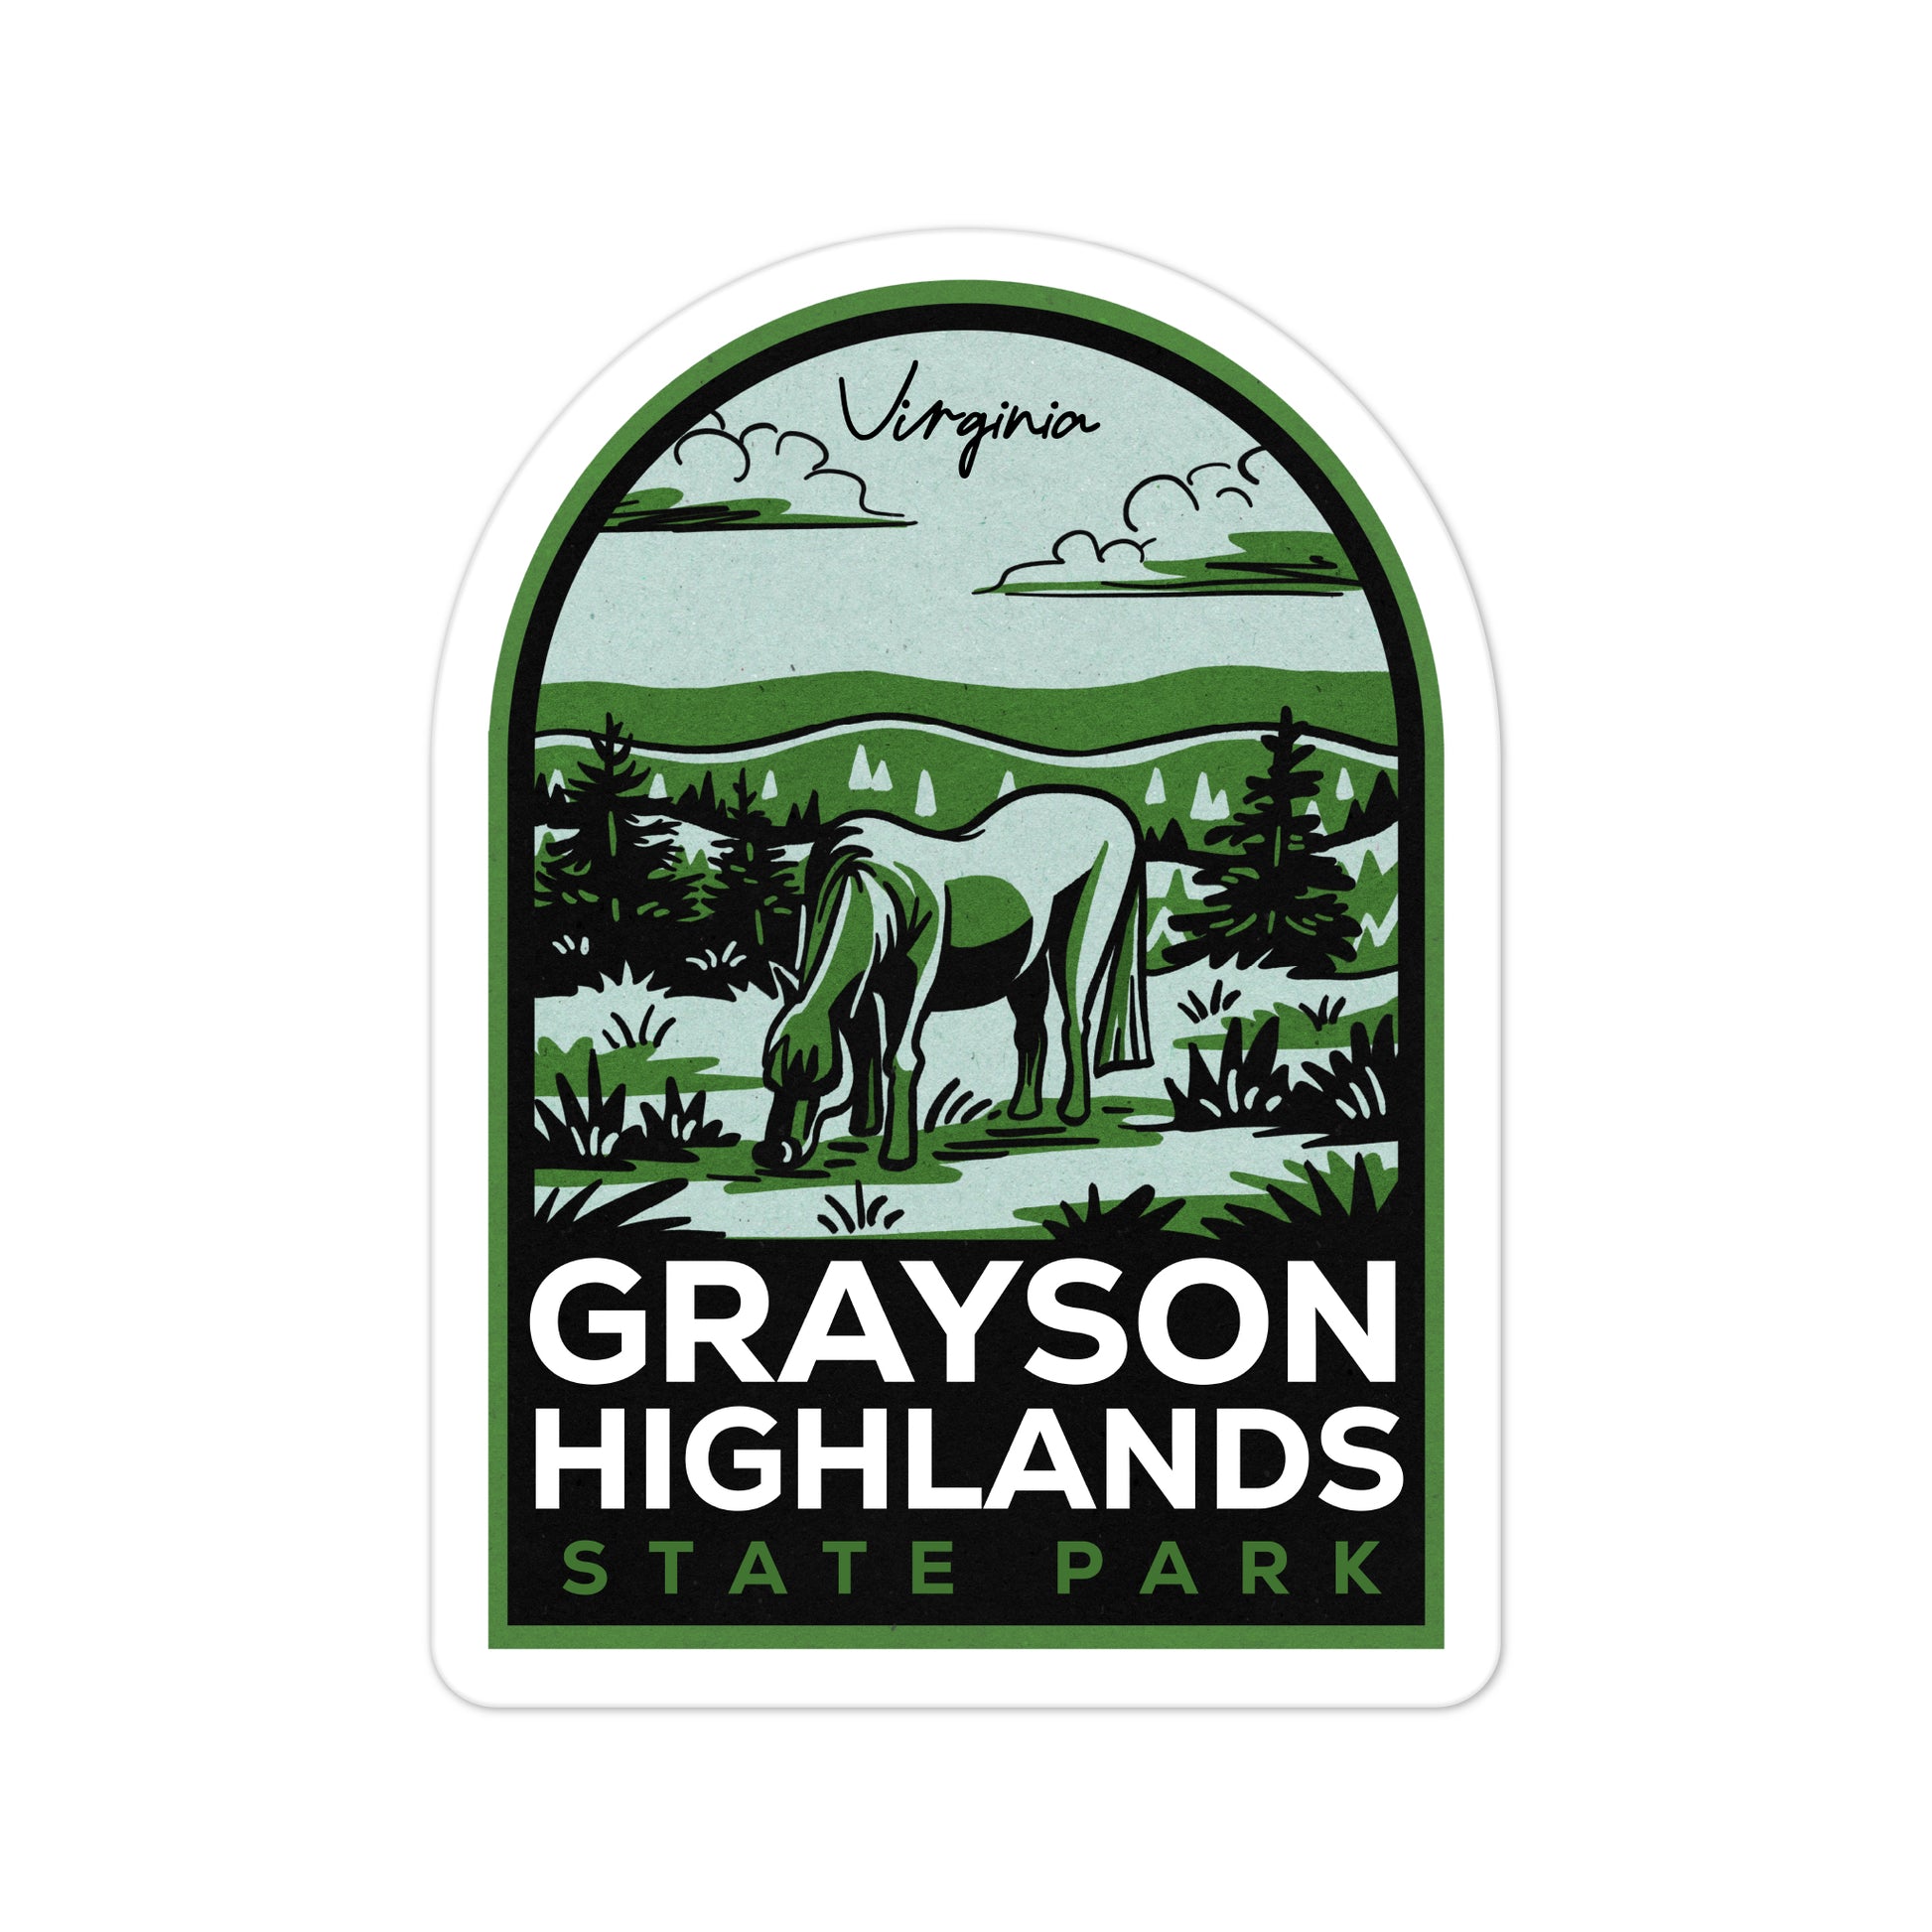 A sticker of Grayson Highlands State Park